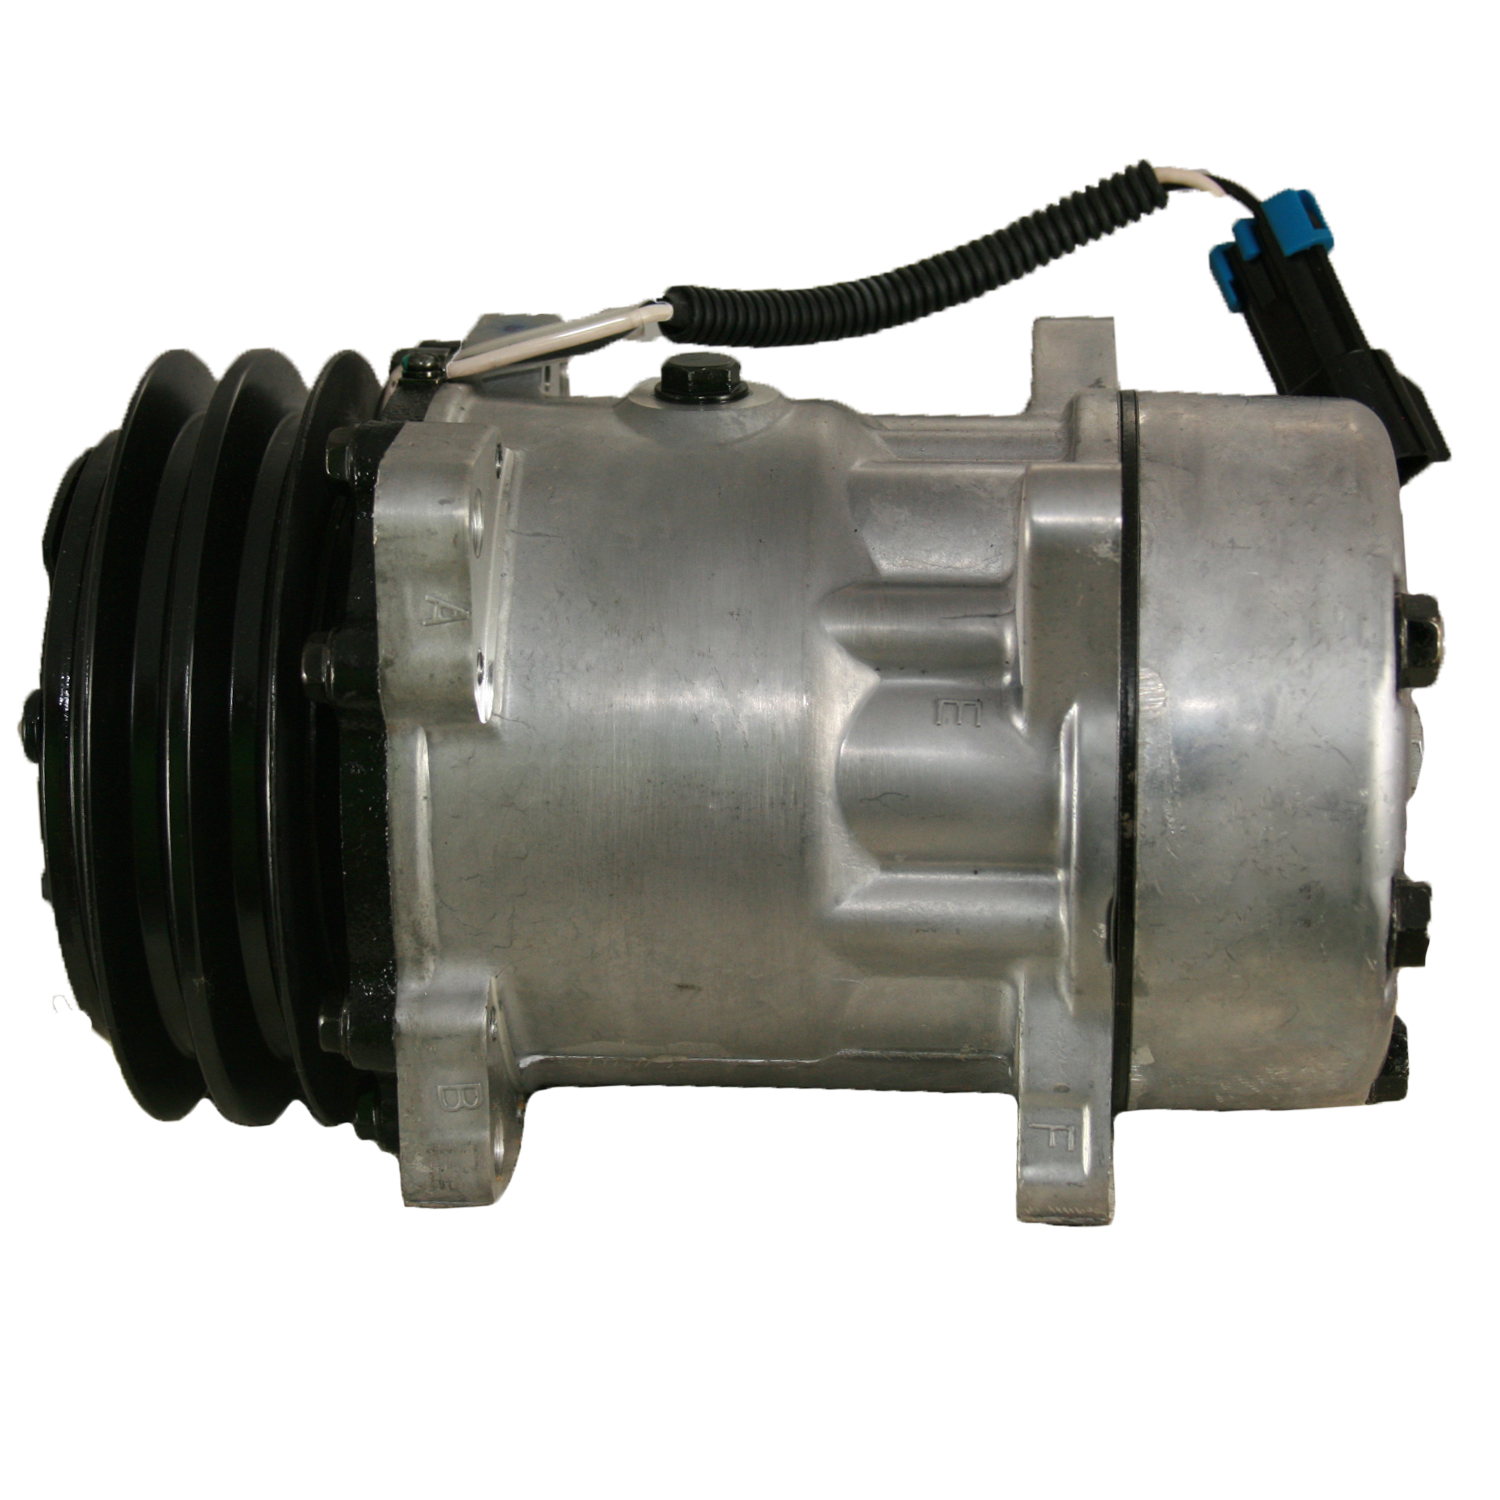 TCW Compressor 40583.202NEW New Product Image field_60b6a13a6e67c